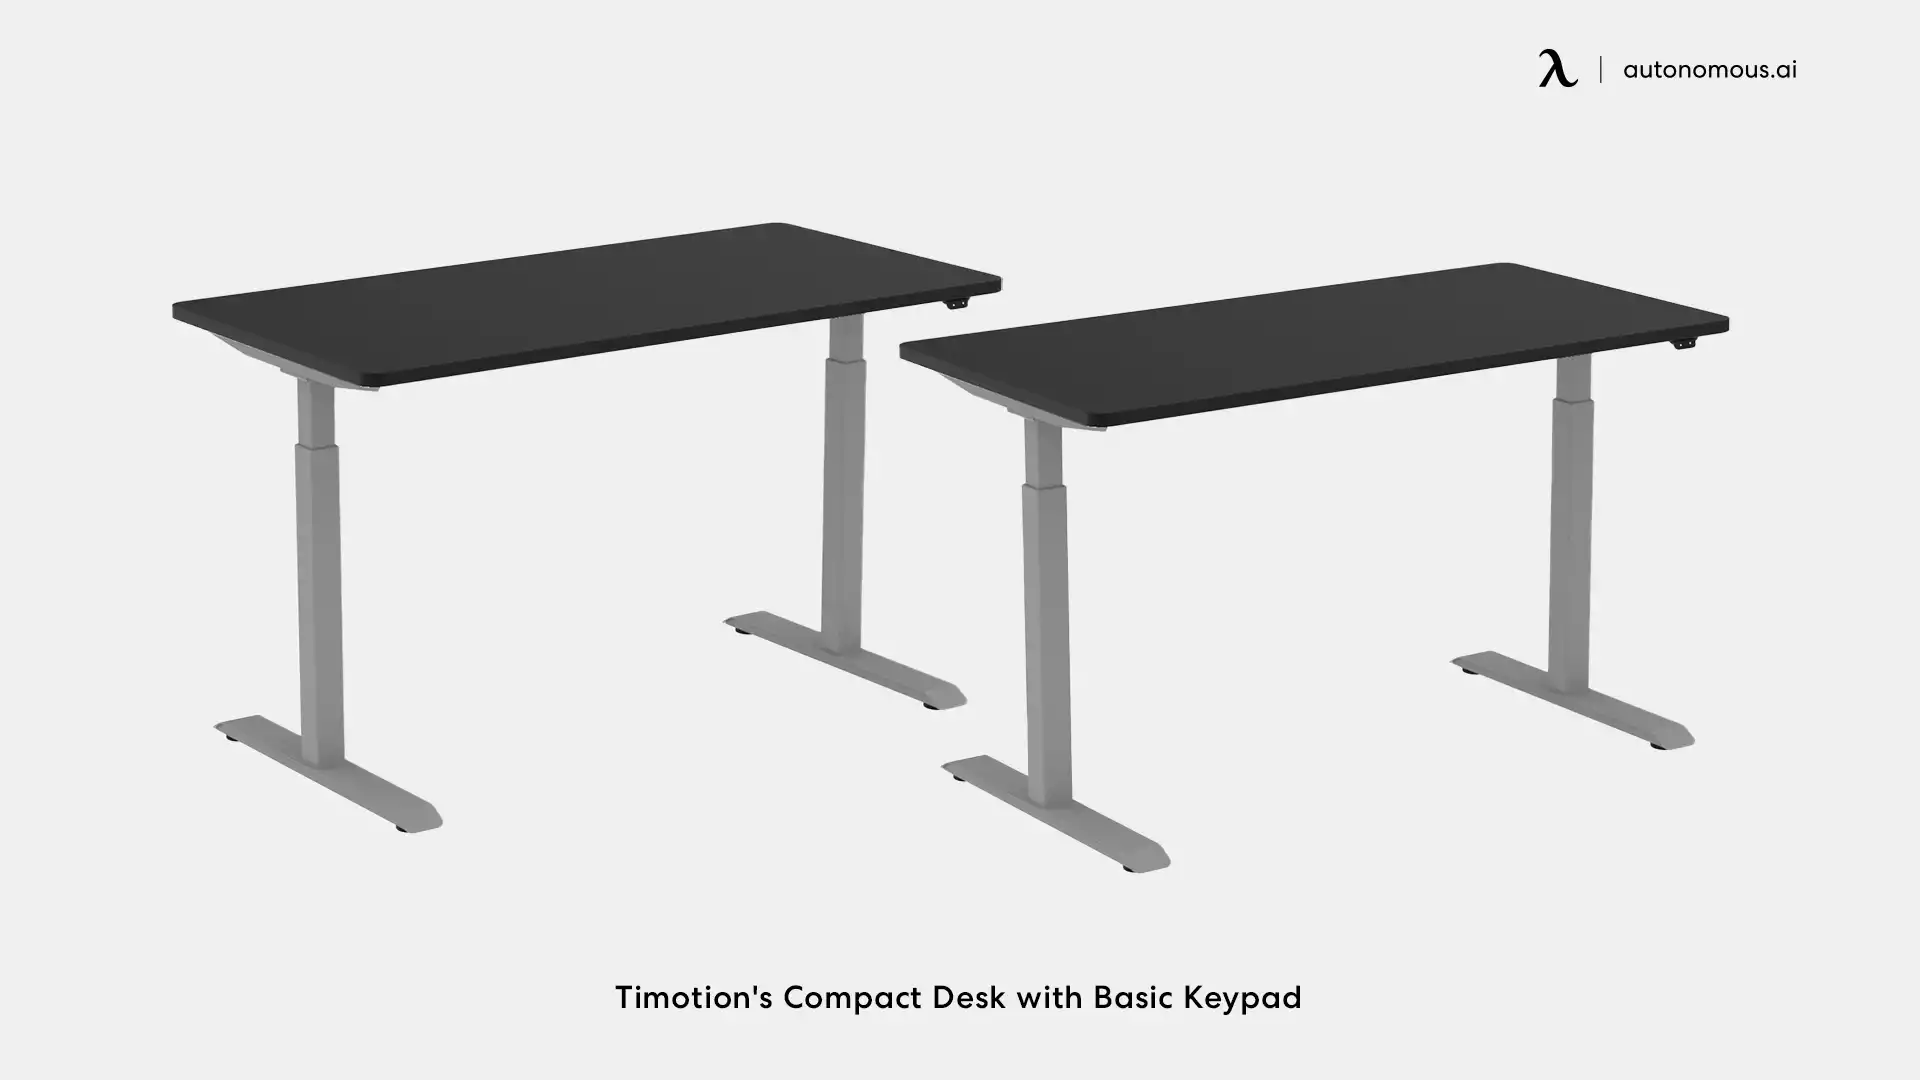 Aoke Compact Desk by Timotion: Basic Keypad